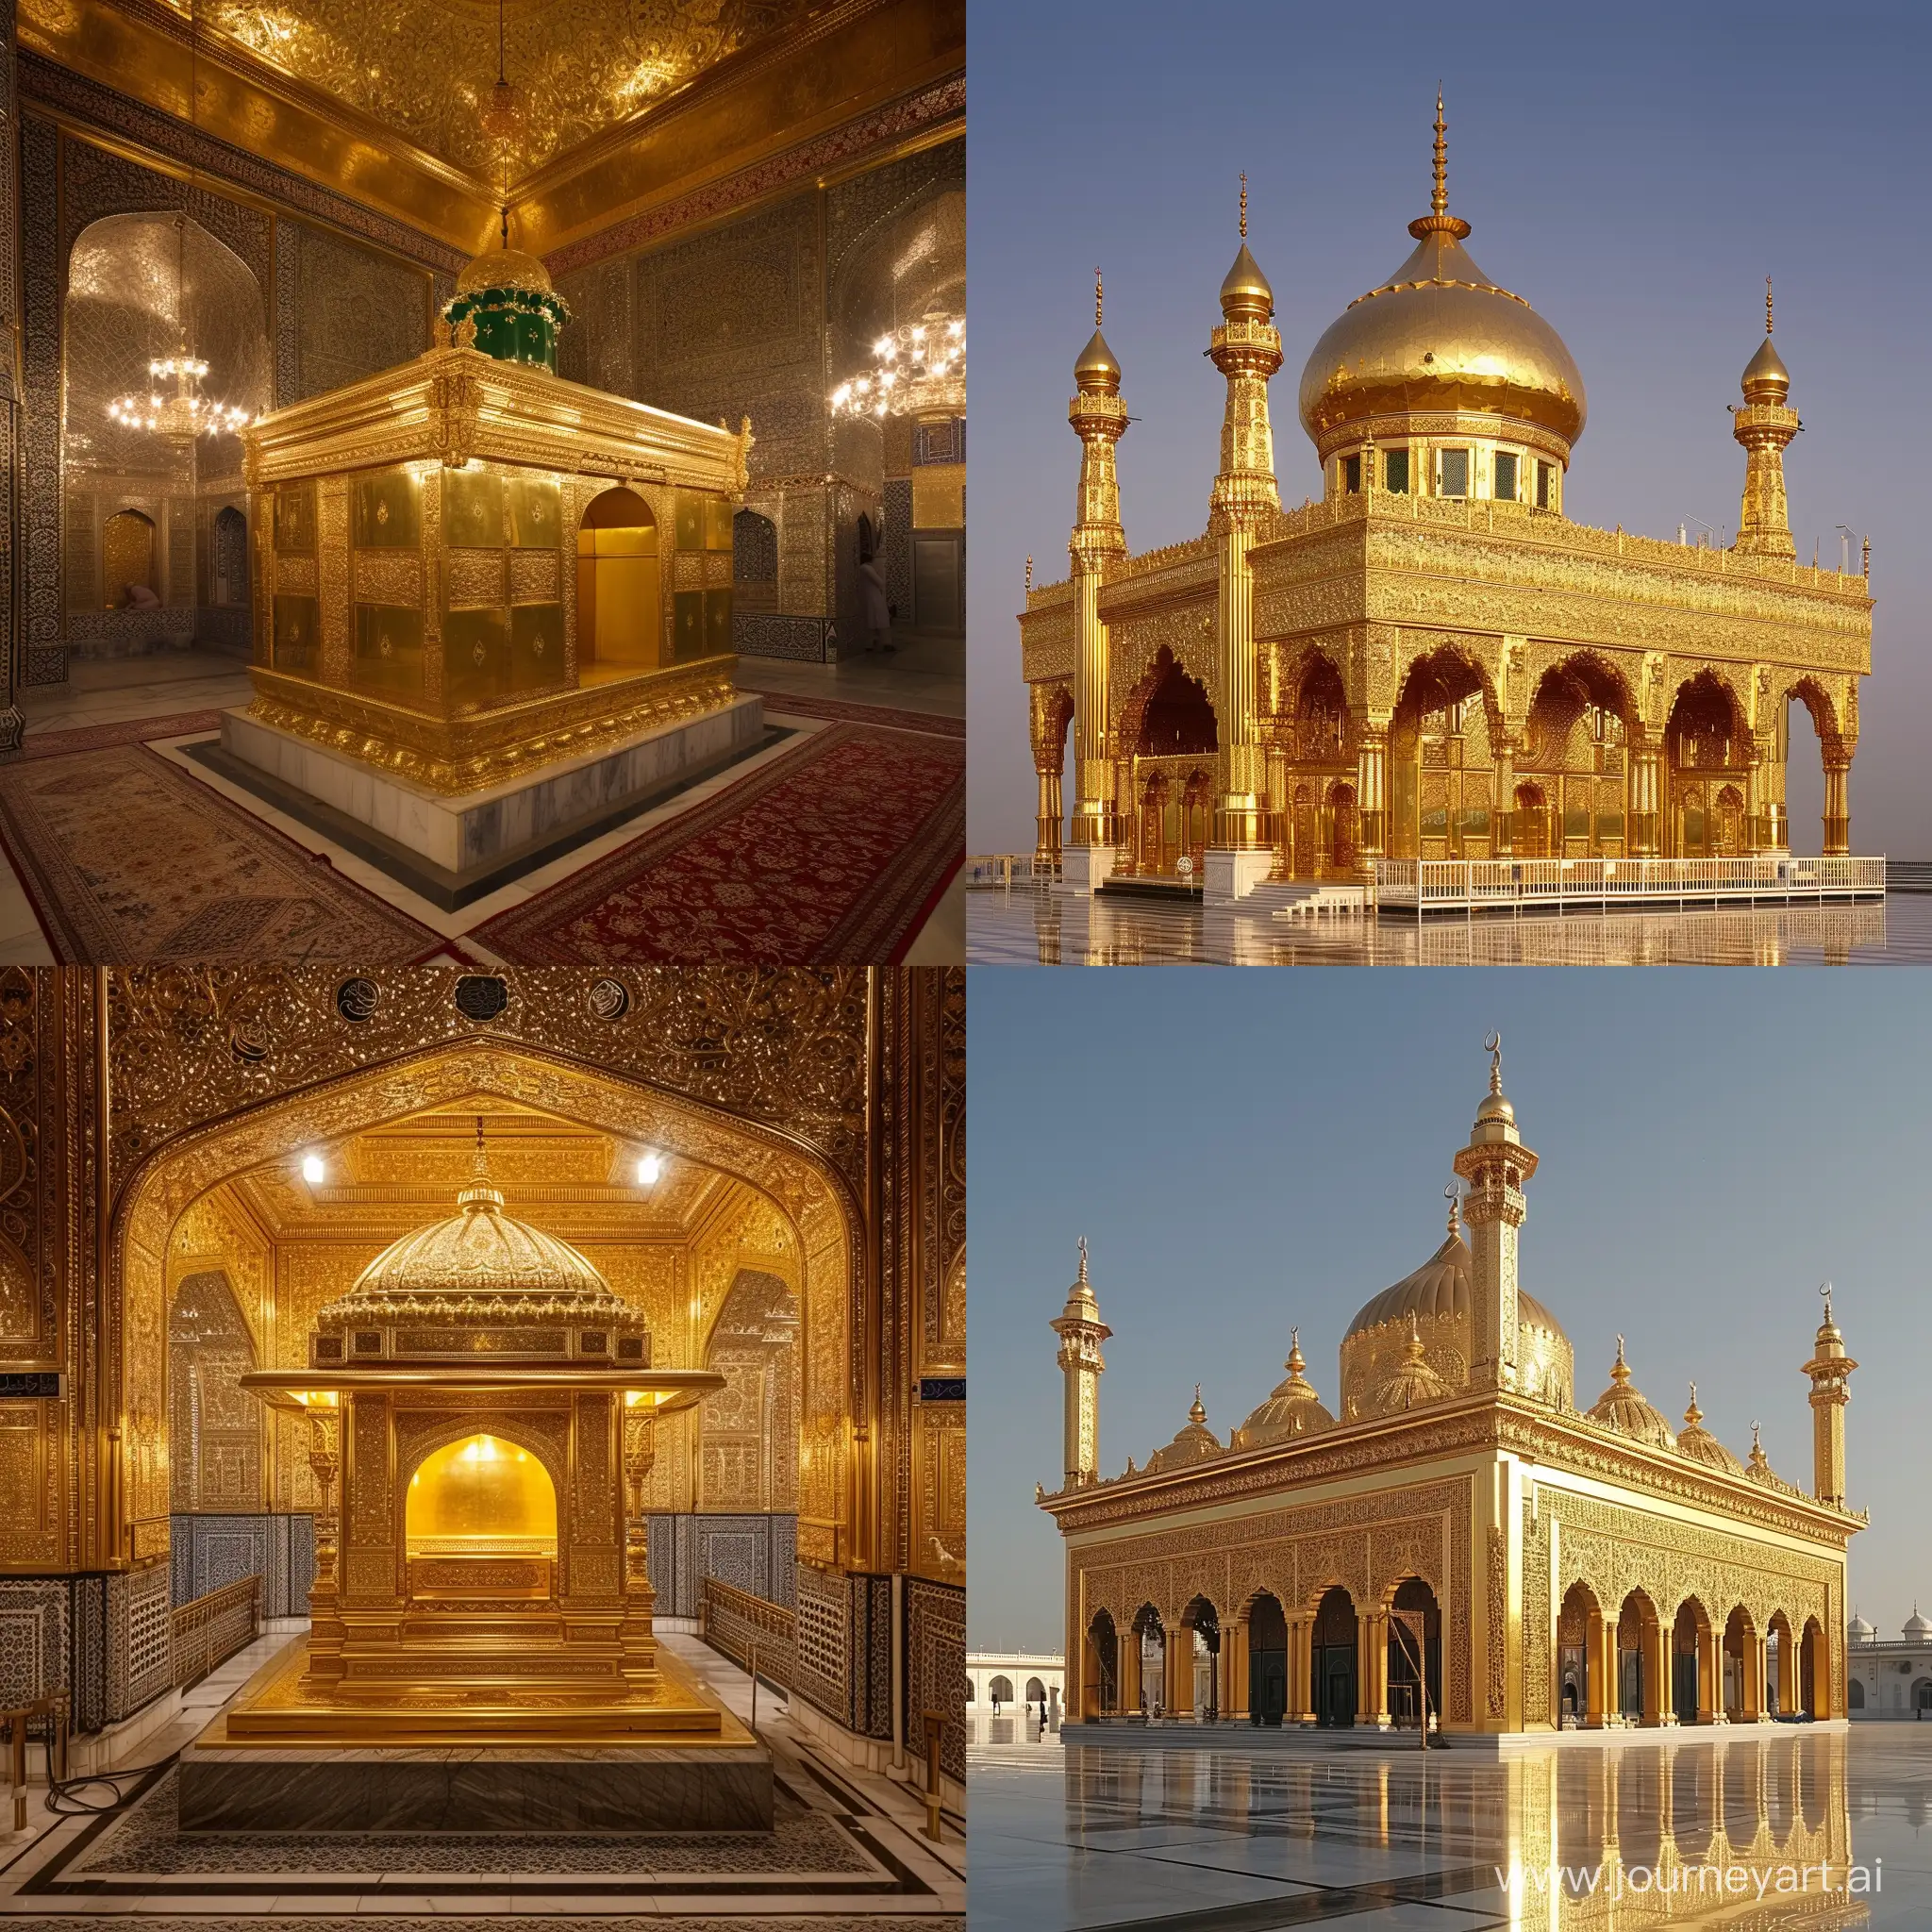 Hazrat-Ali-Golden-Shrine-with-Aspect-Ratio-11-Image-60414